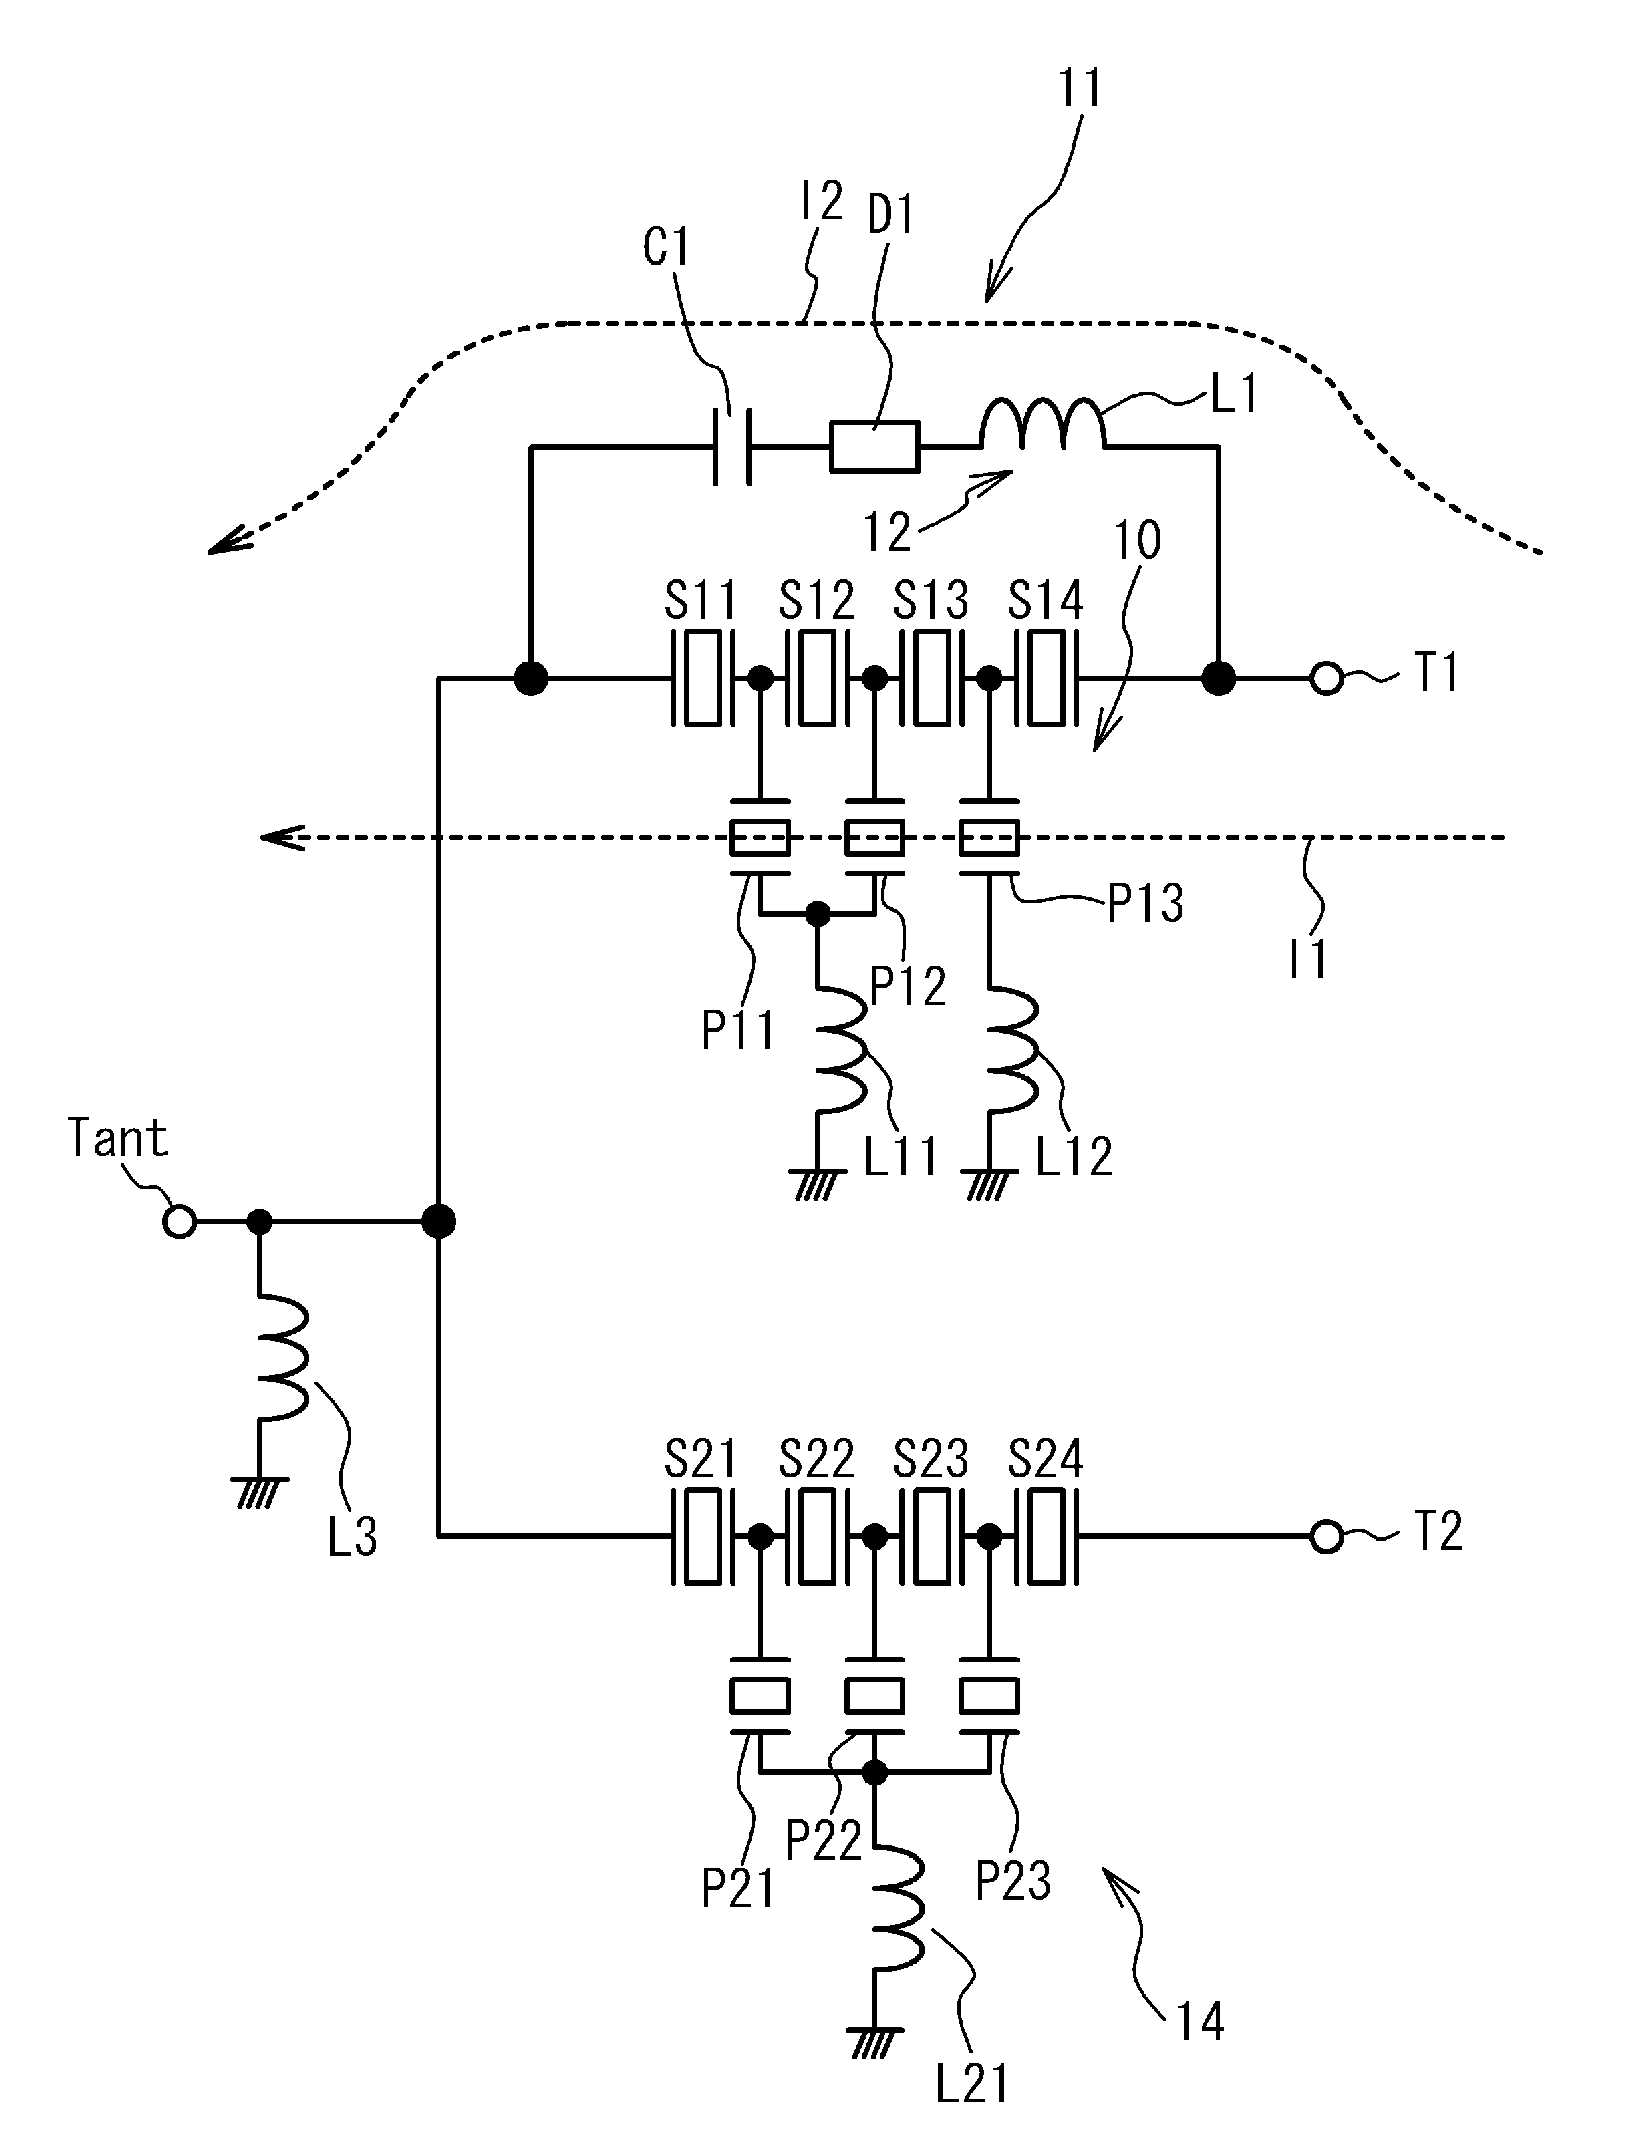 Filter circuit, duplexer and RF module